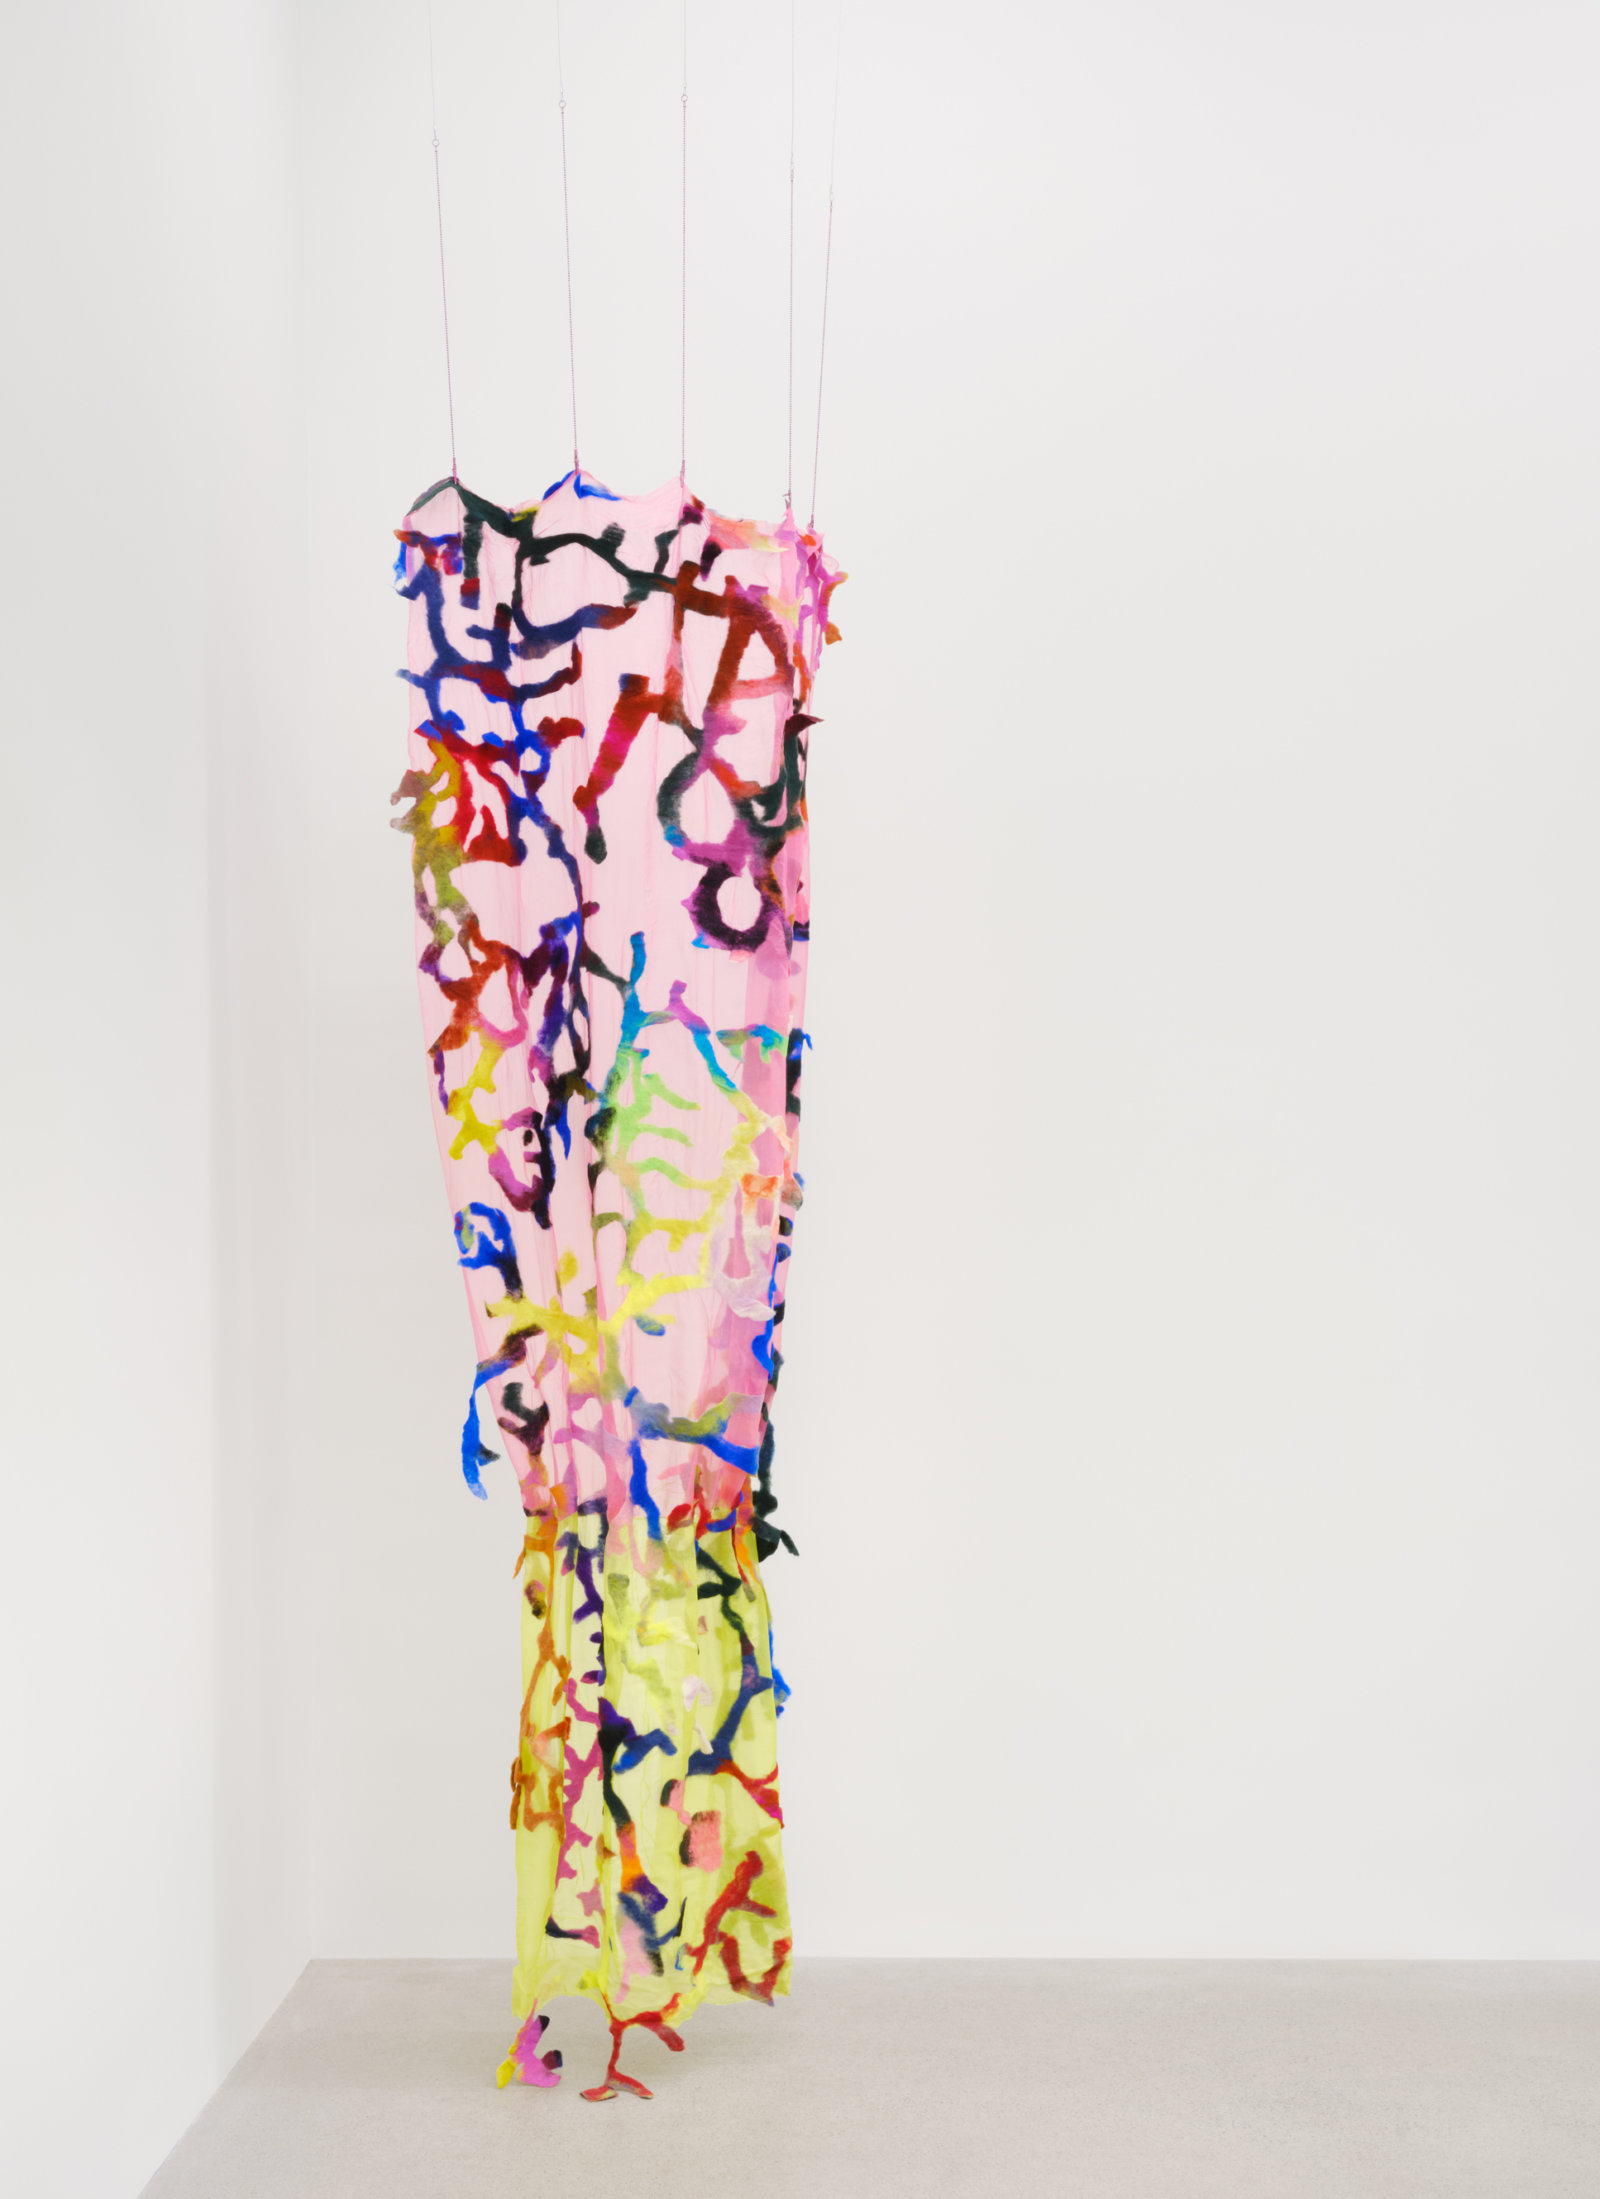 Rebecca Brewer, Total Loss, 2019, silk, wool felt, alligator clips, ball chain, 114 x 52 in. (290 x 132 cm)